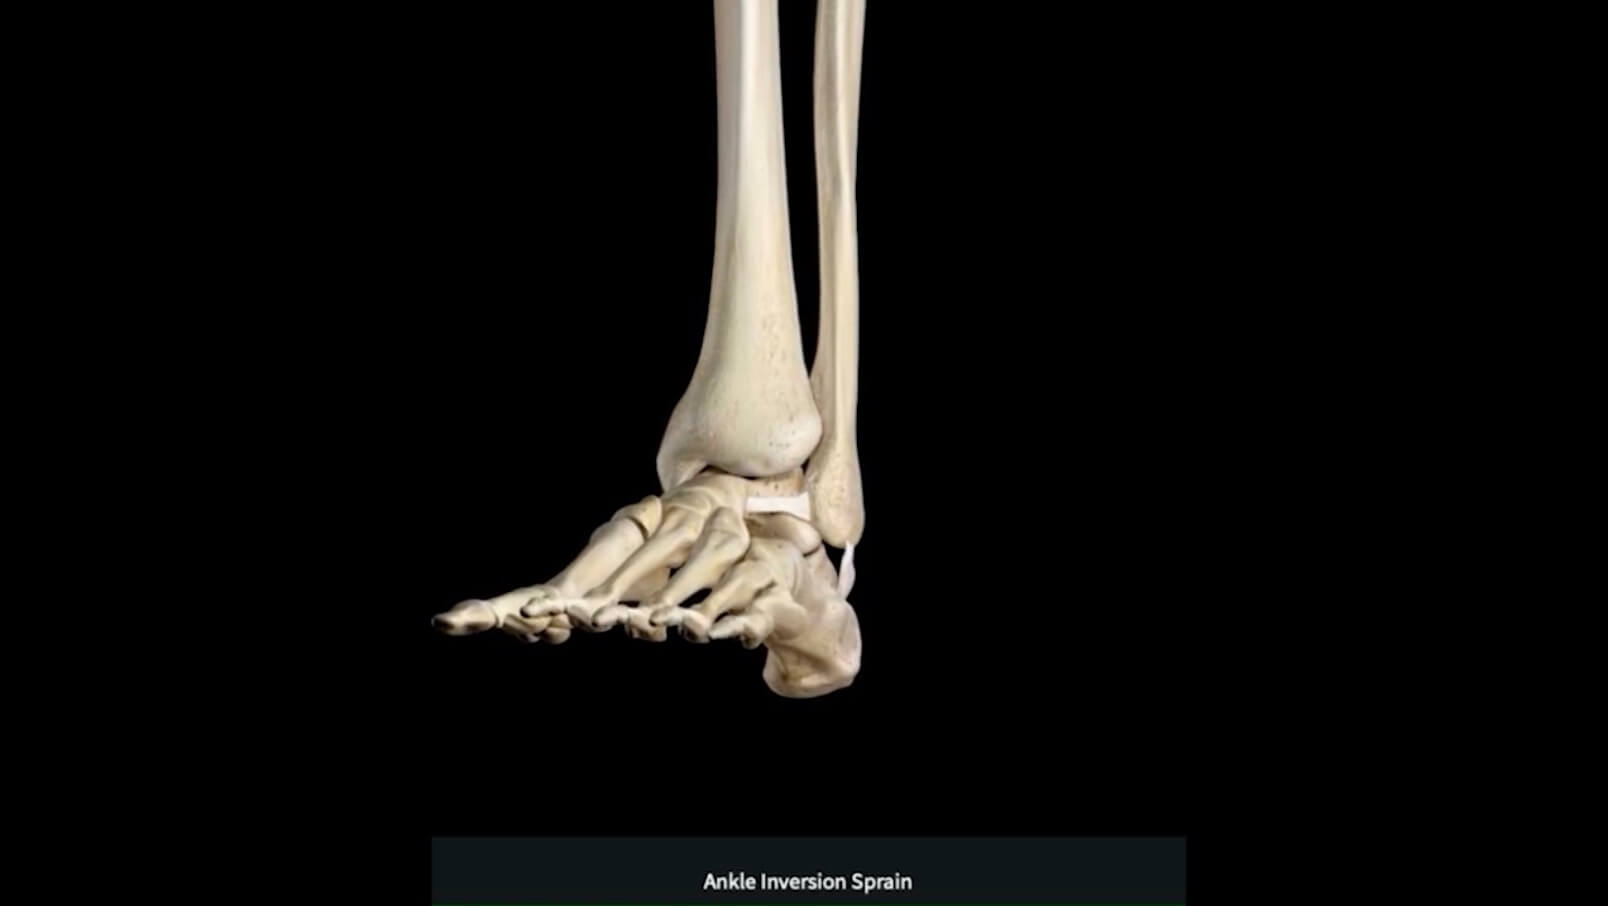 Ankle Inversion Sprain DIAGNOSIS